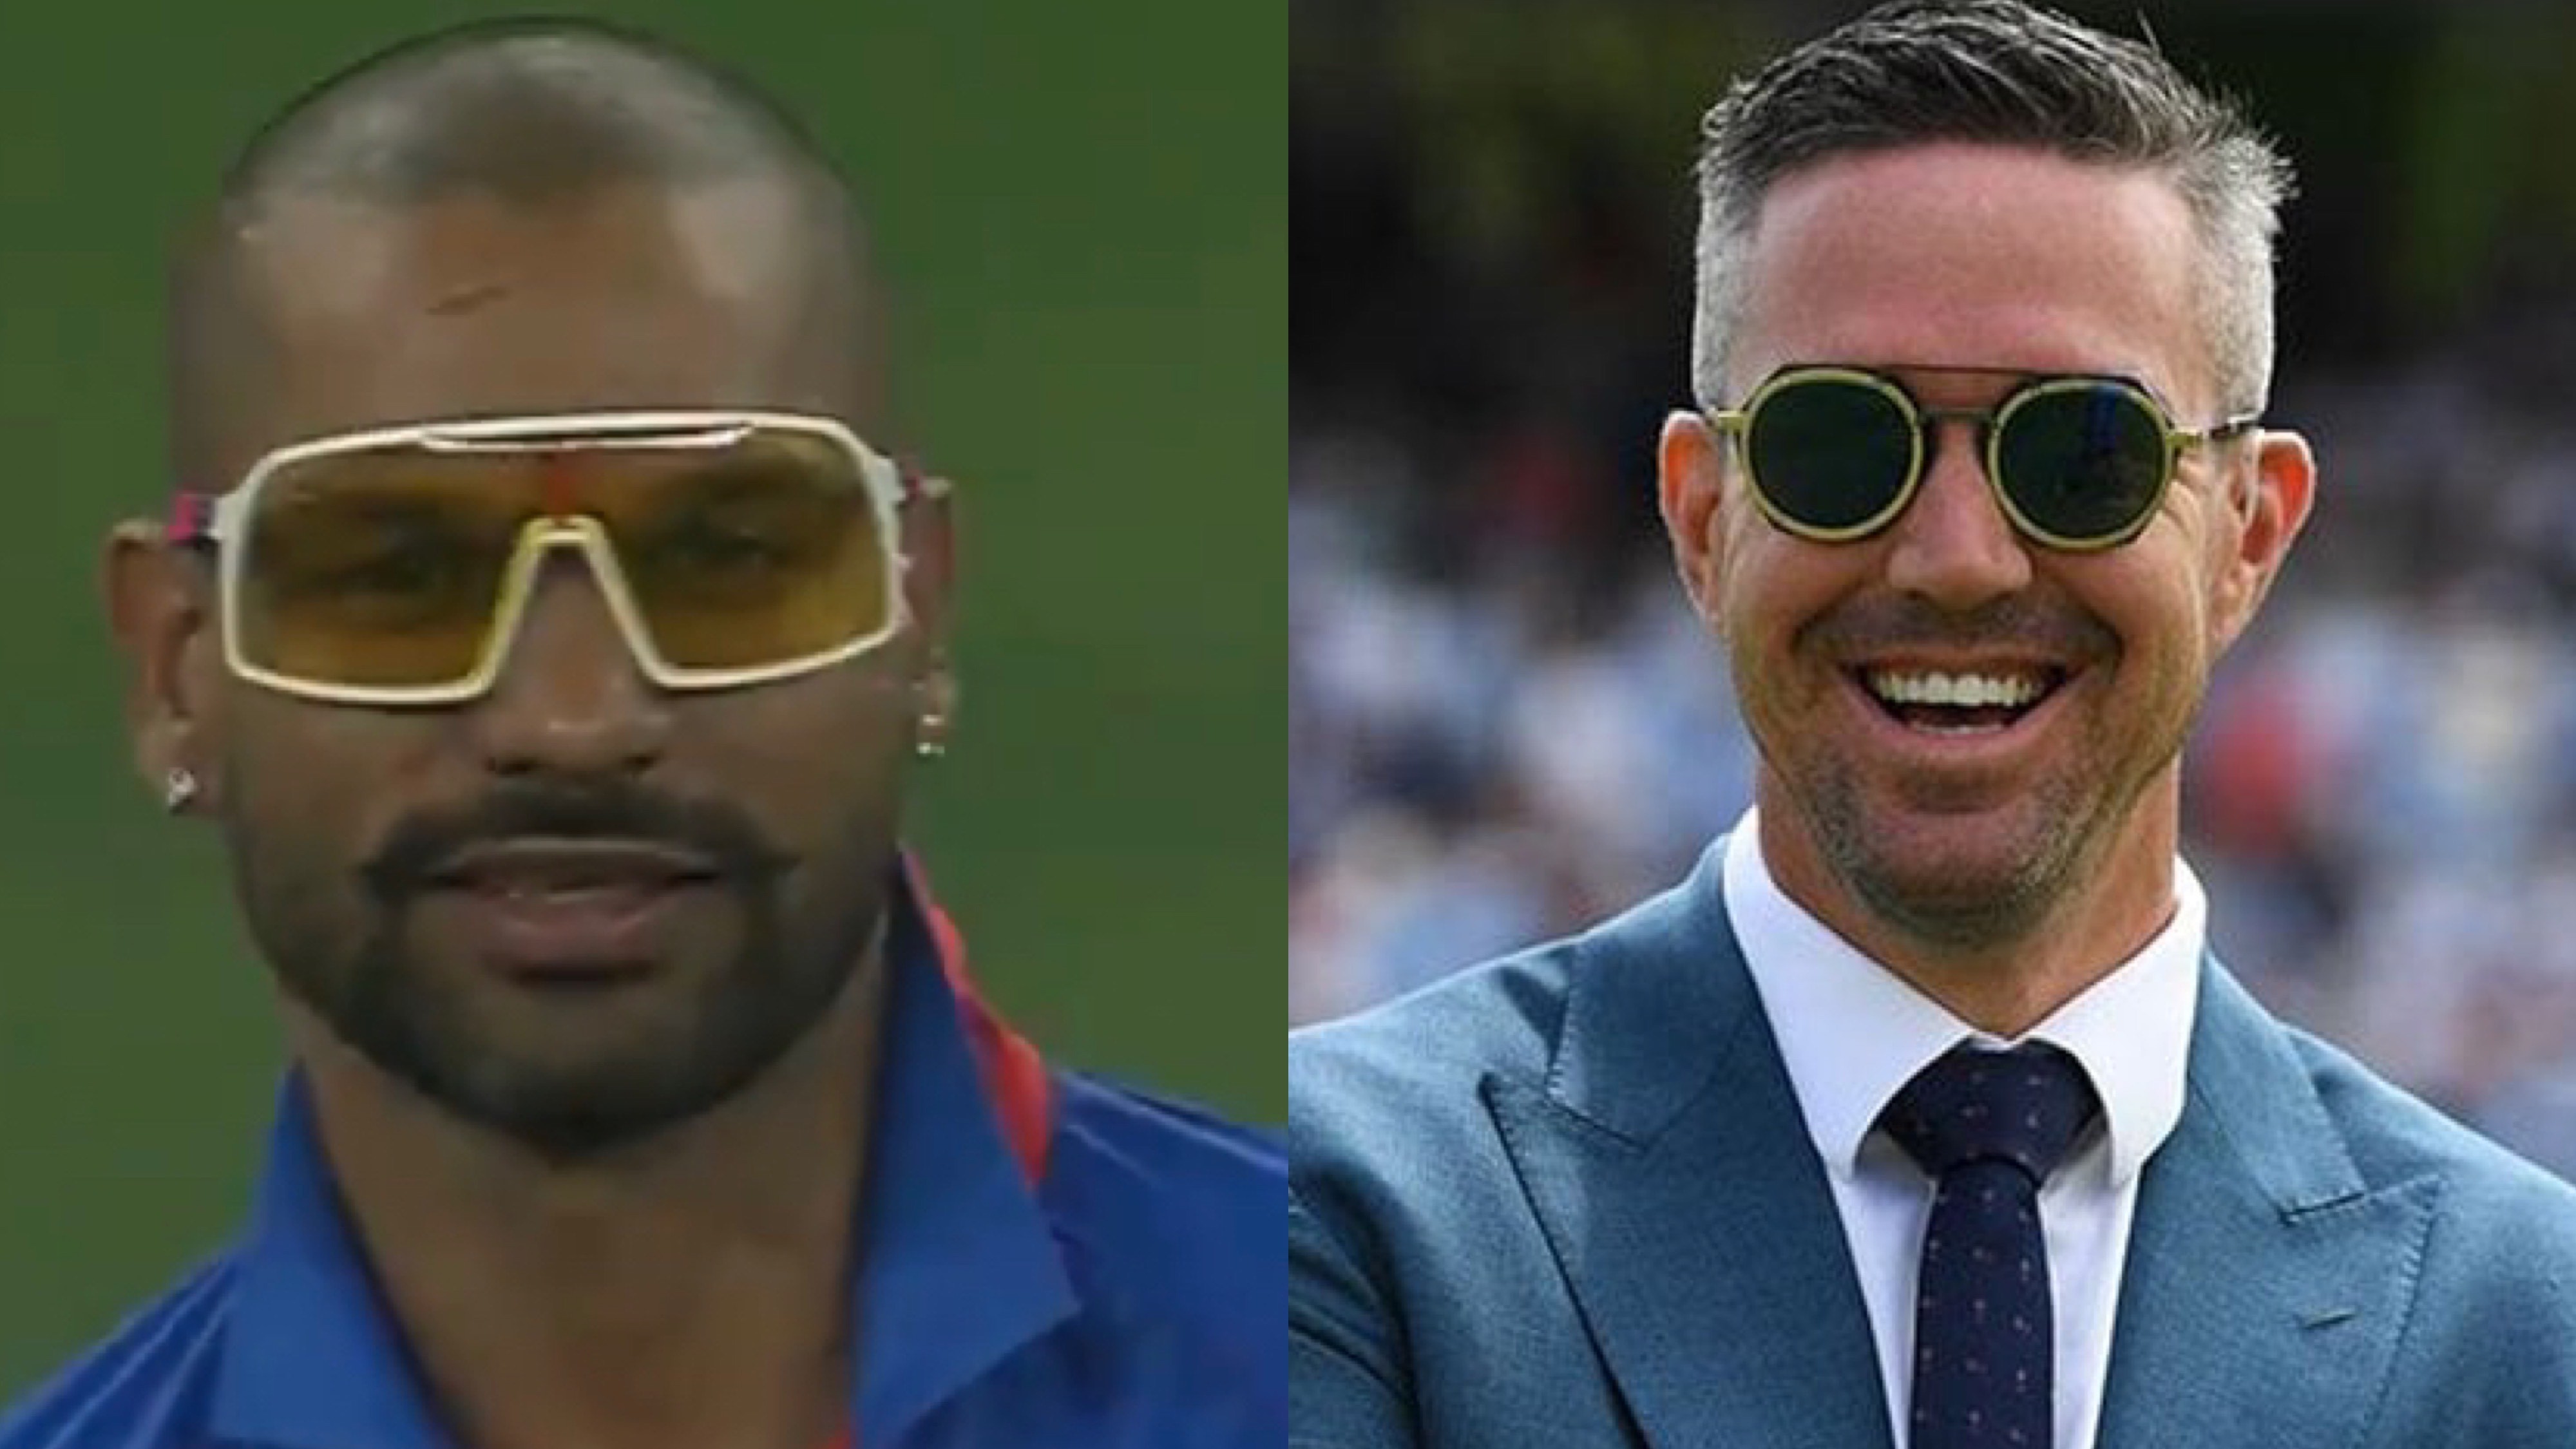 IPL 2020: Kevin Pietersen and Twitterati react hilariously to Shikhar Dhawan's wacky glasses